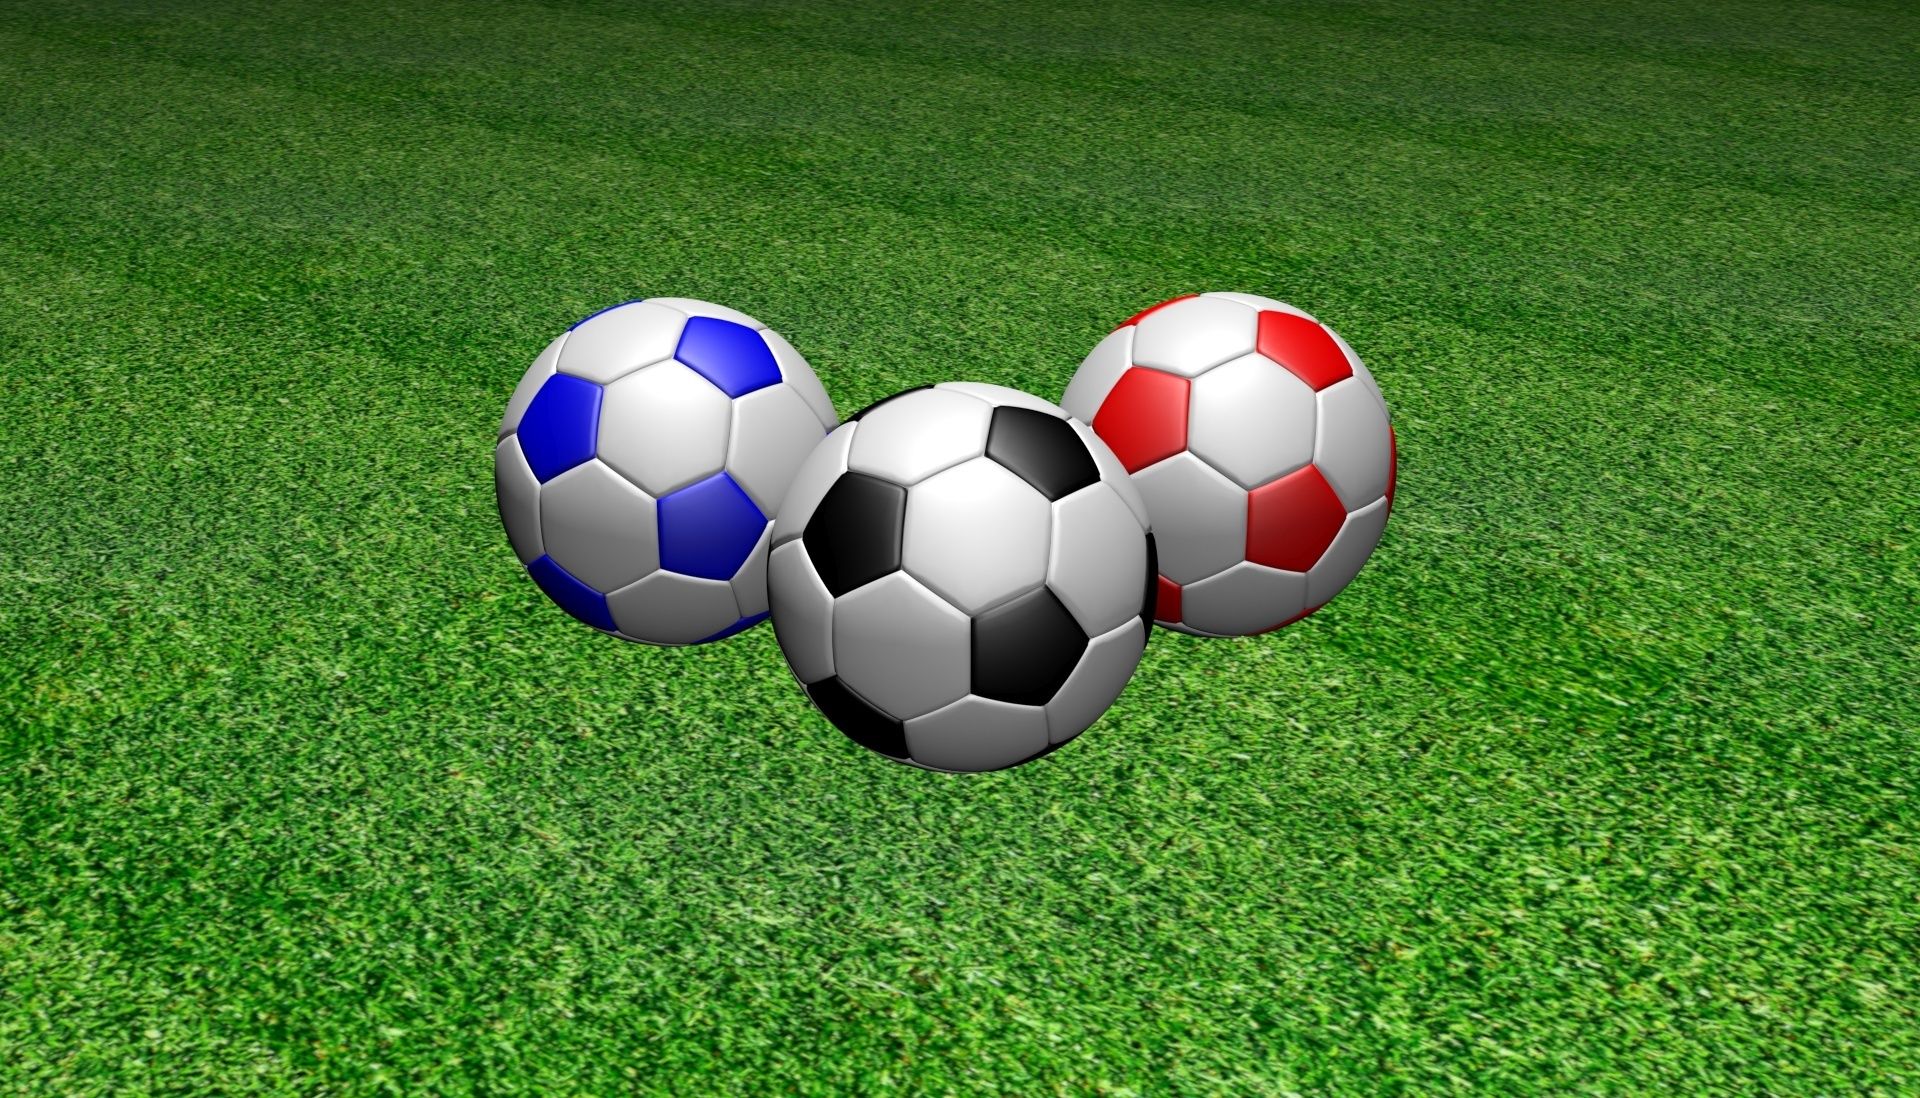 all balls.jpg Download file Soccer Balls • 3D printing model, Knight1341